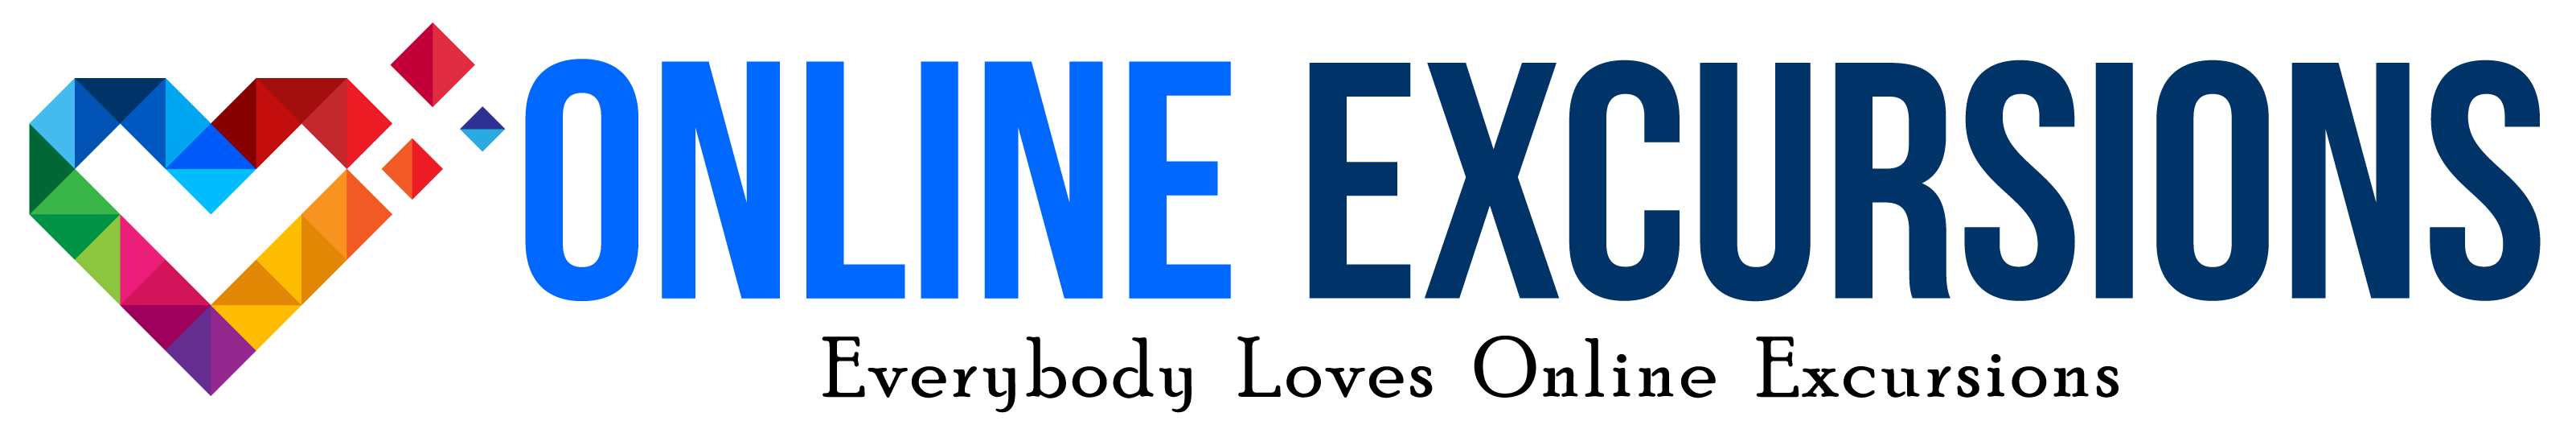 11Online Excursions Logo